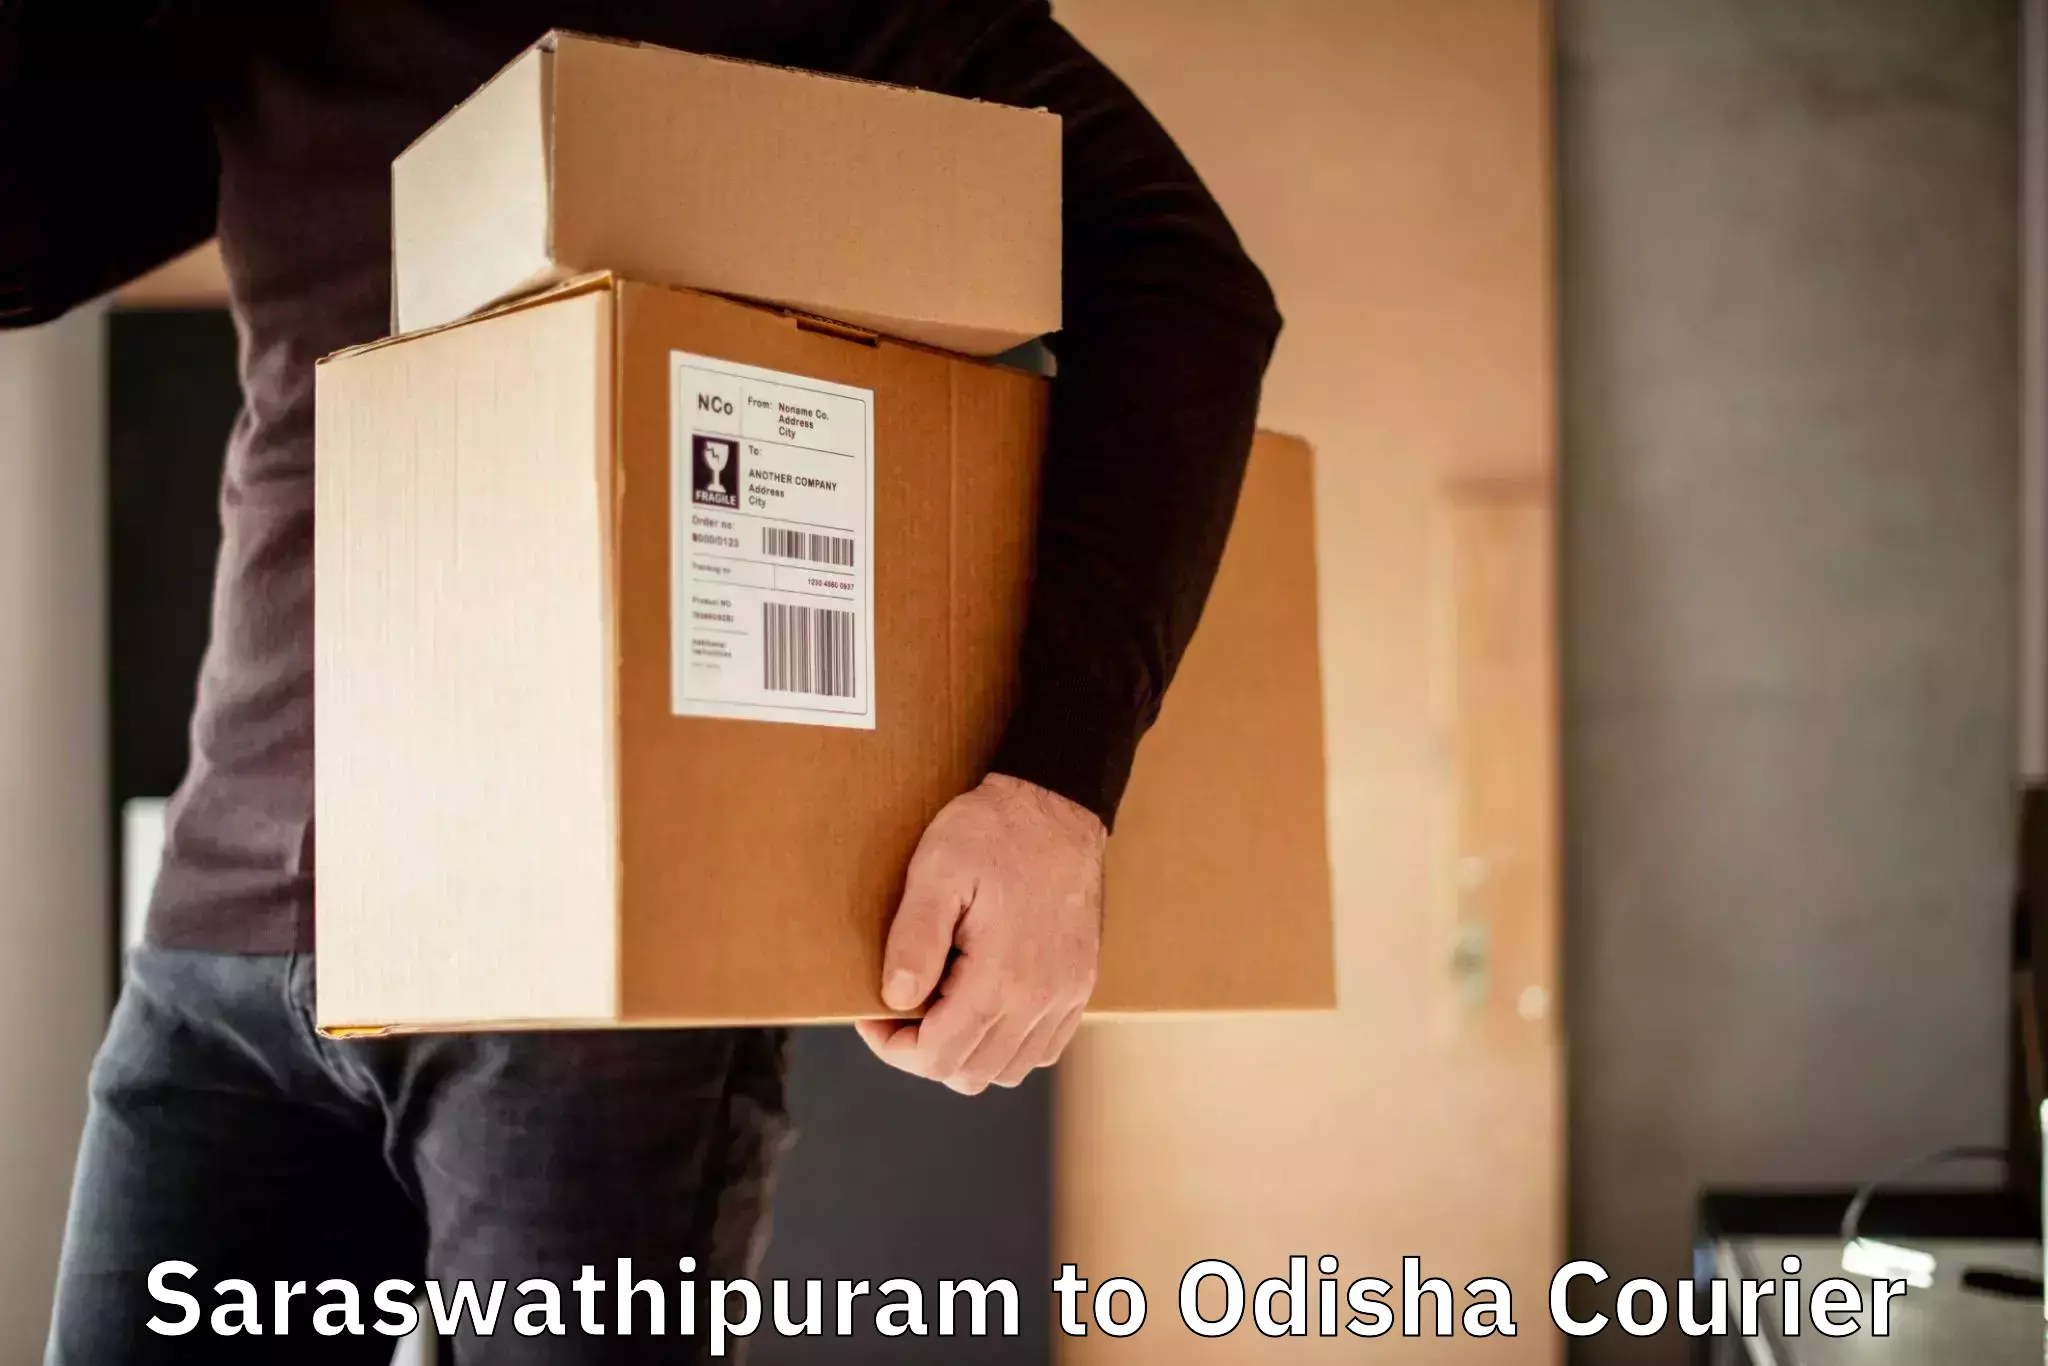 State-of-the-art courier technology Saraswathipuram to Odisha